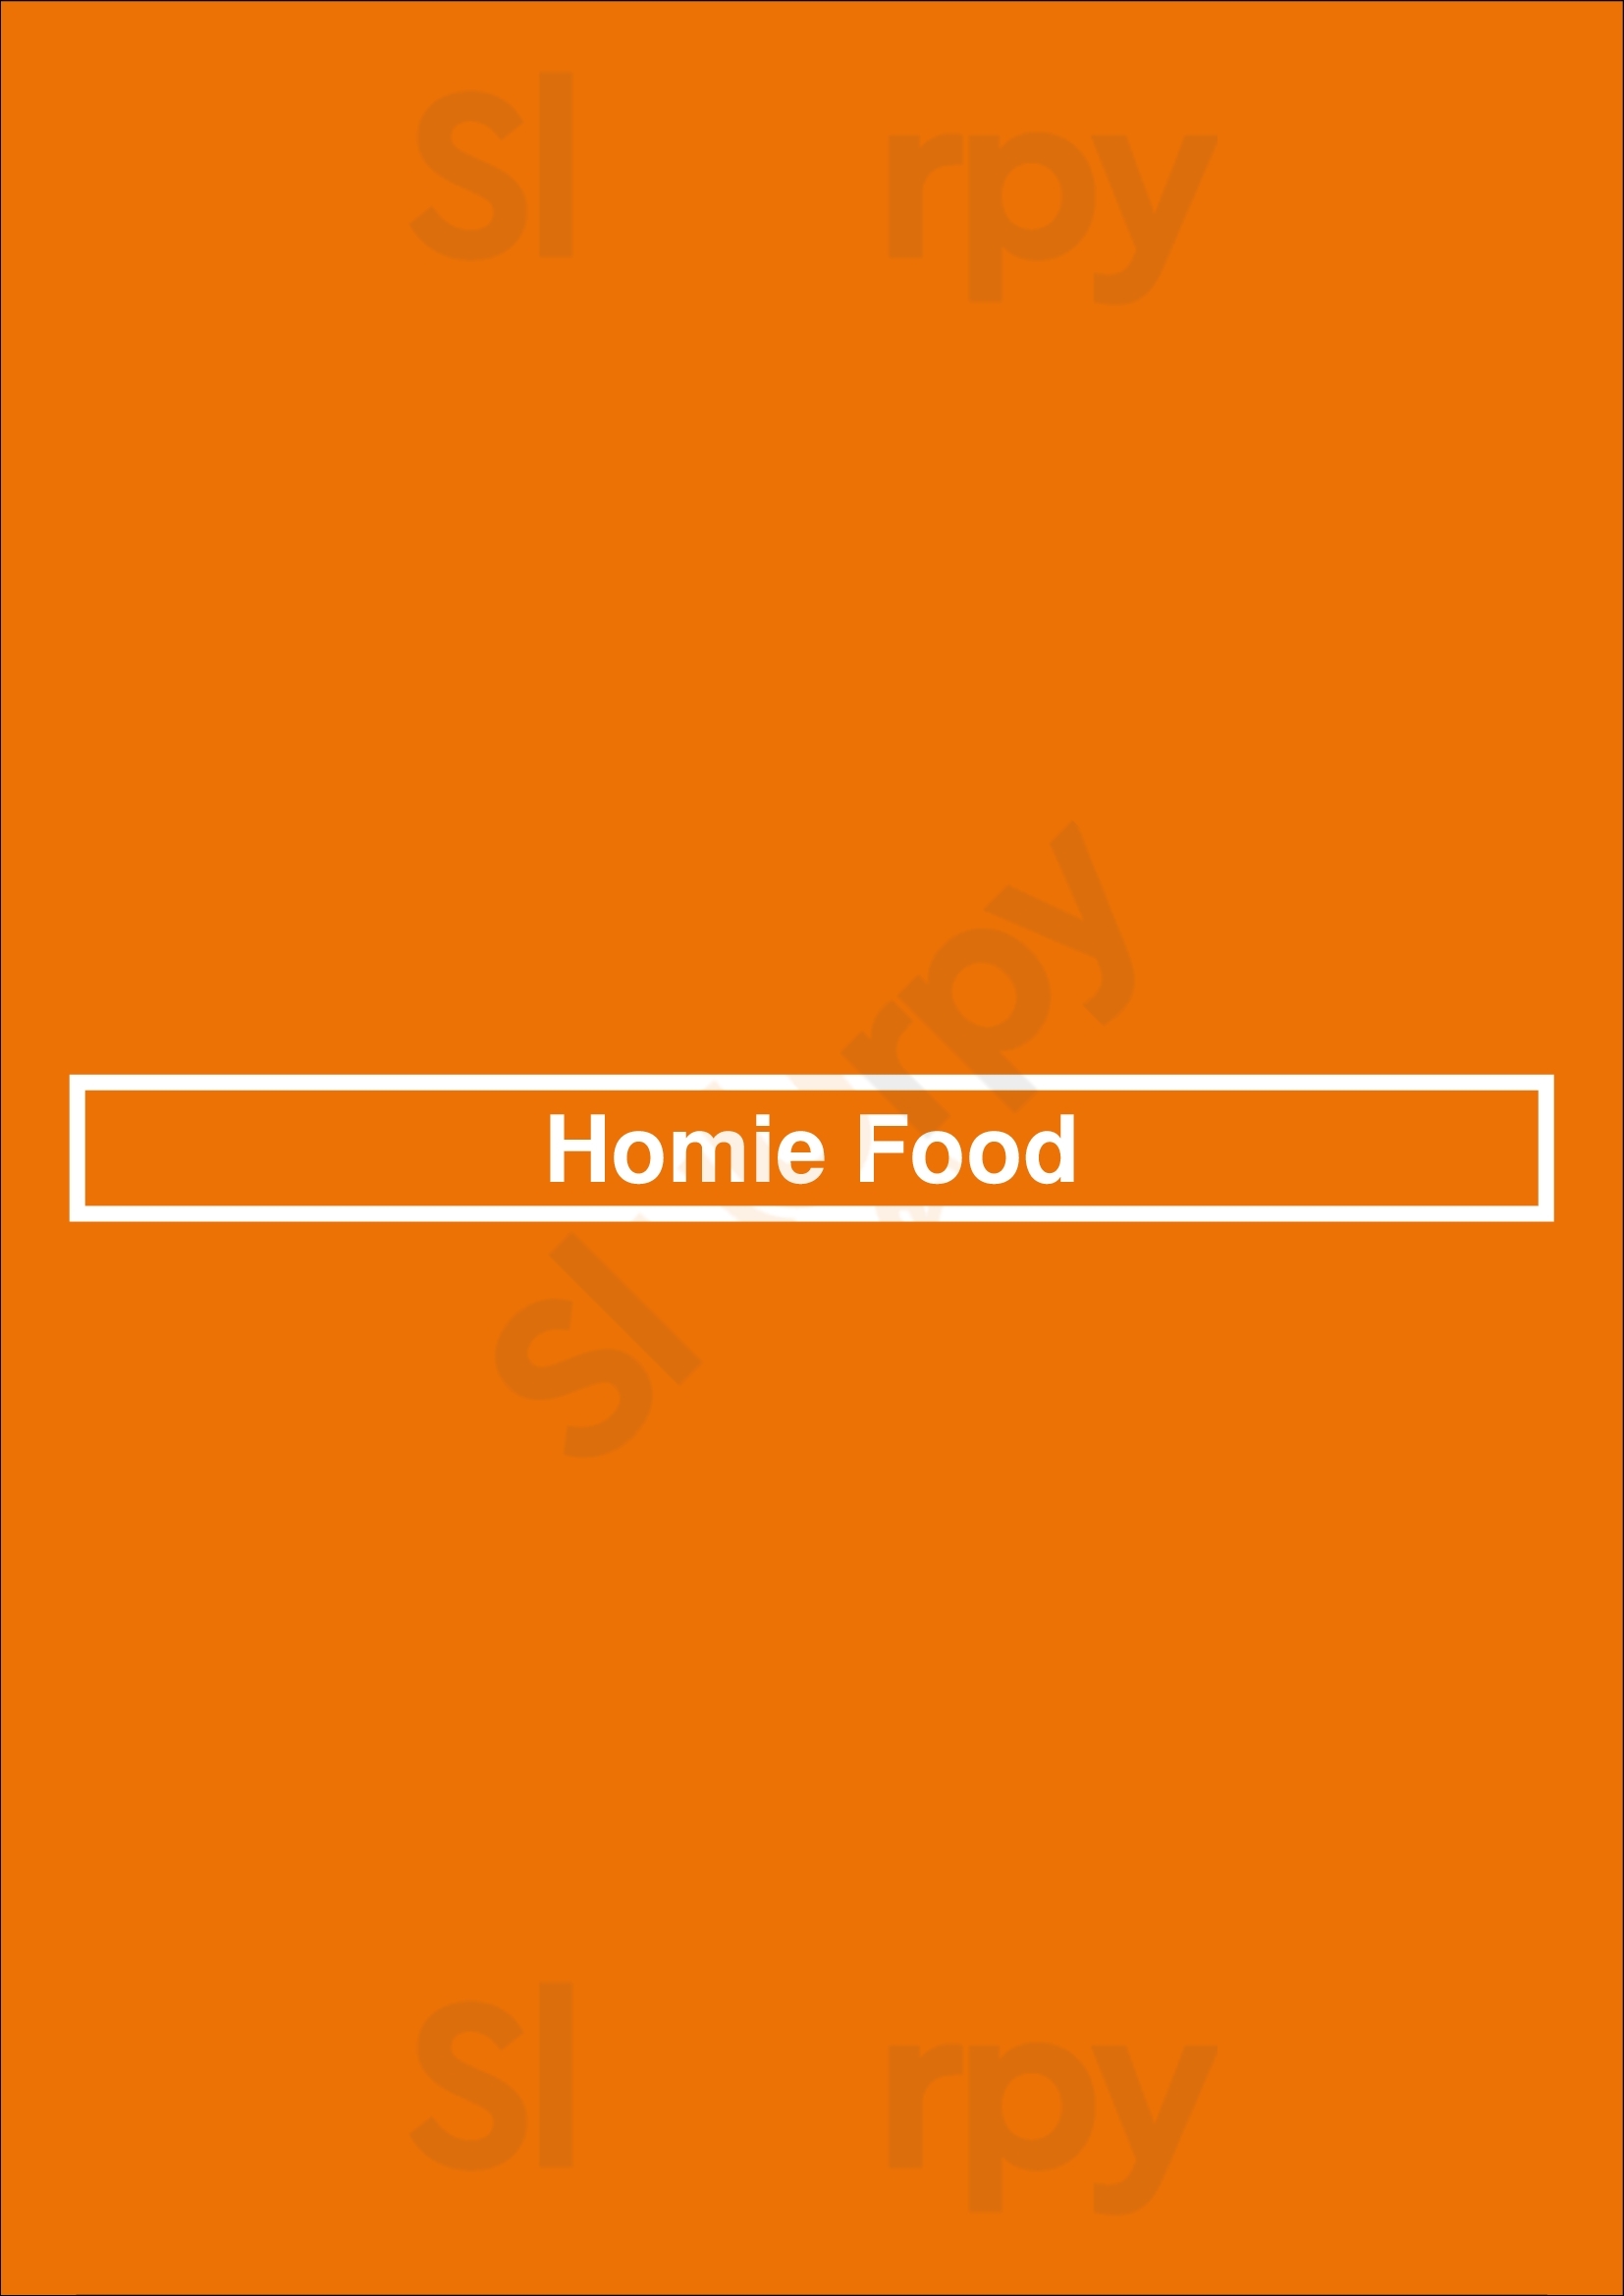 Homie Food Rotterdam Menu - 1